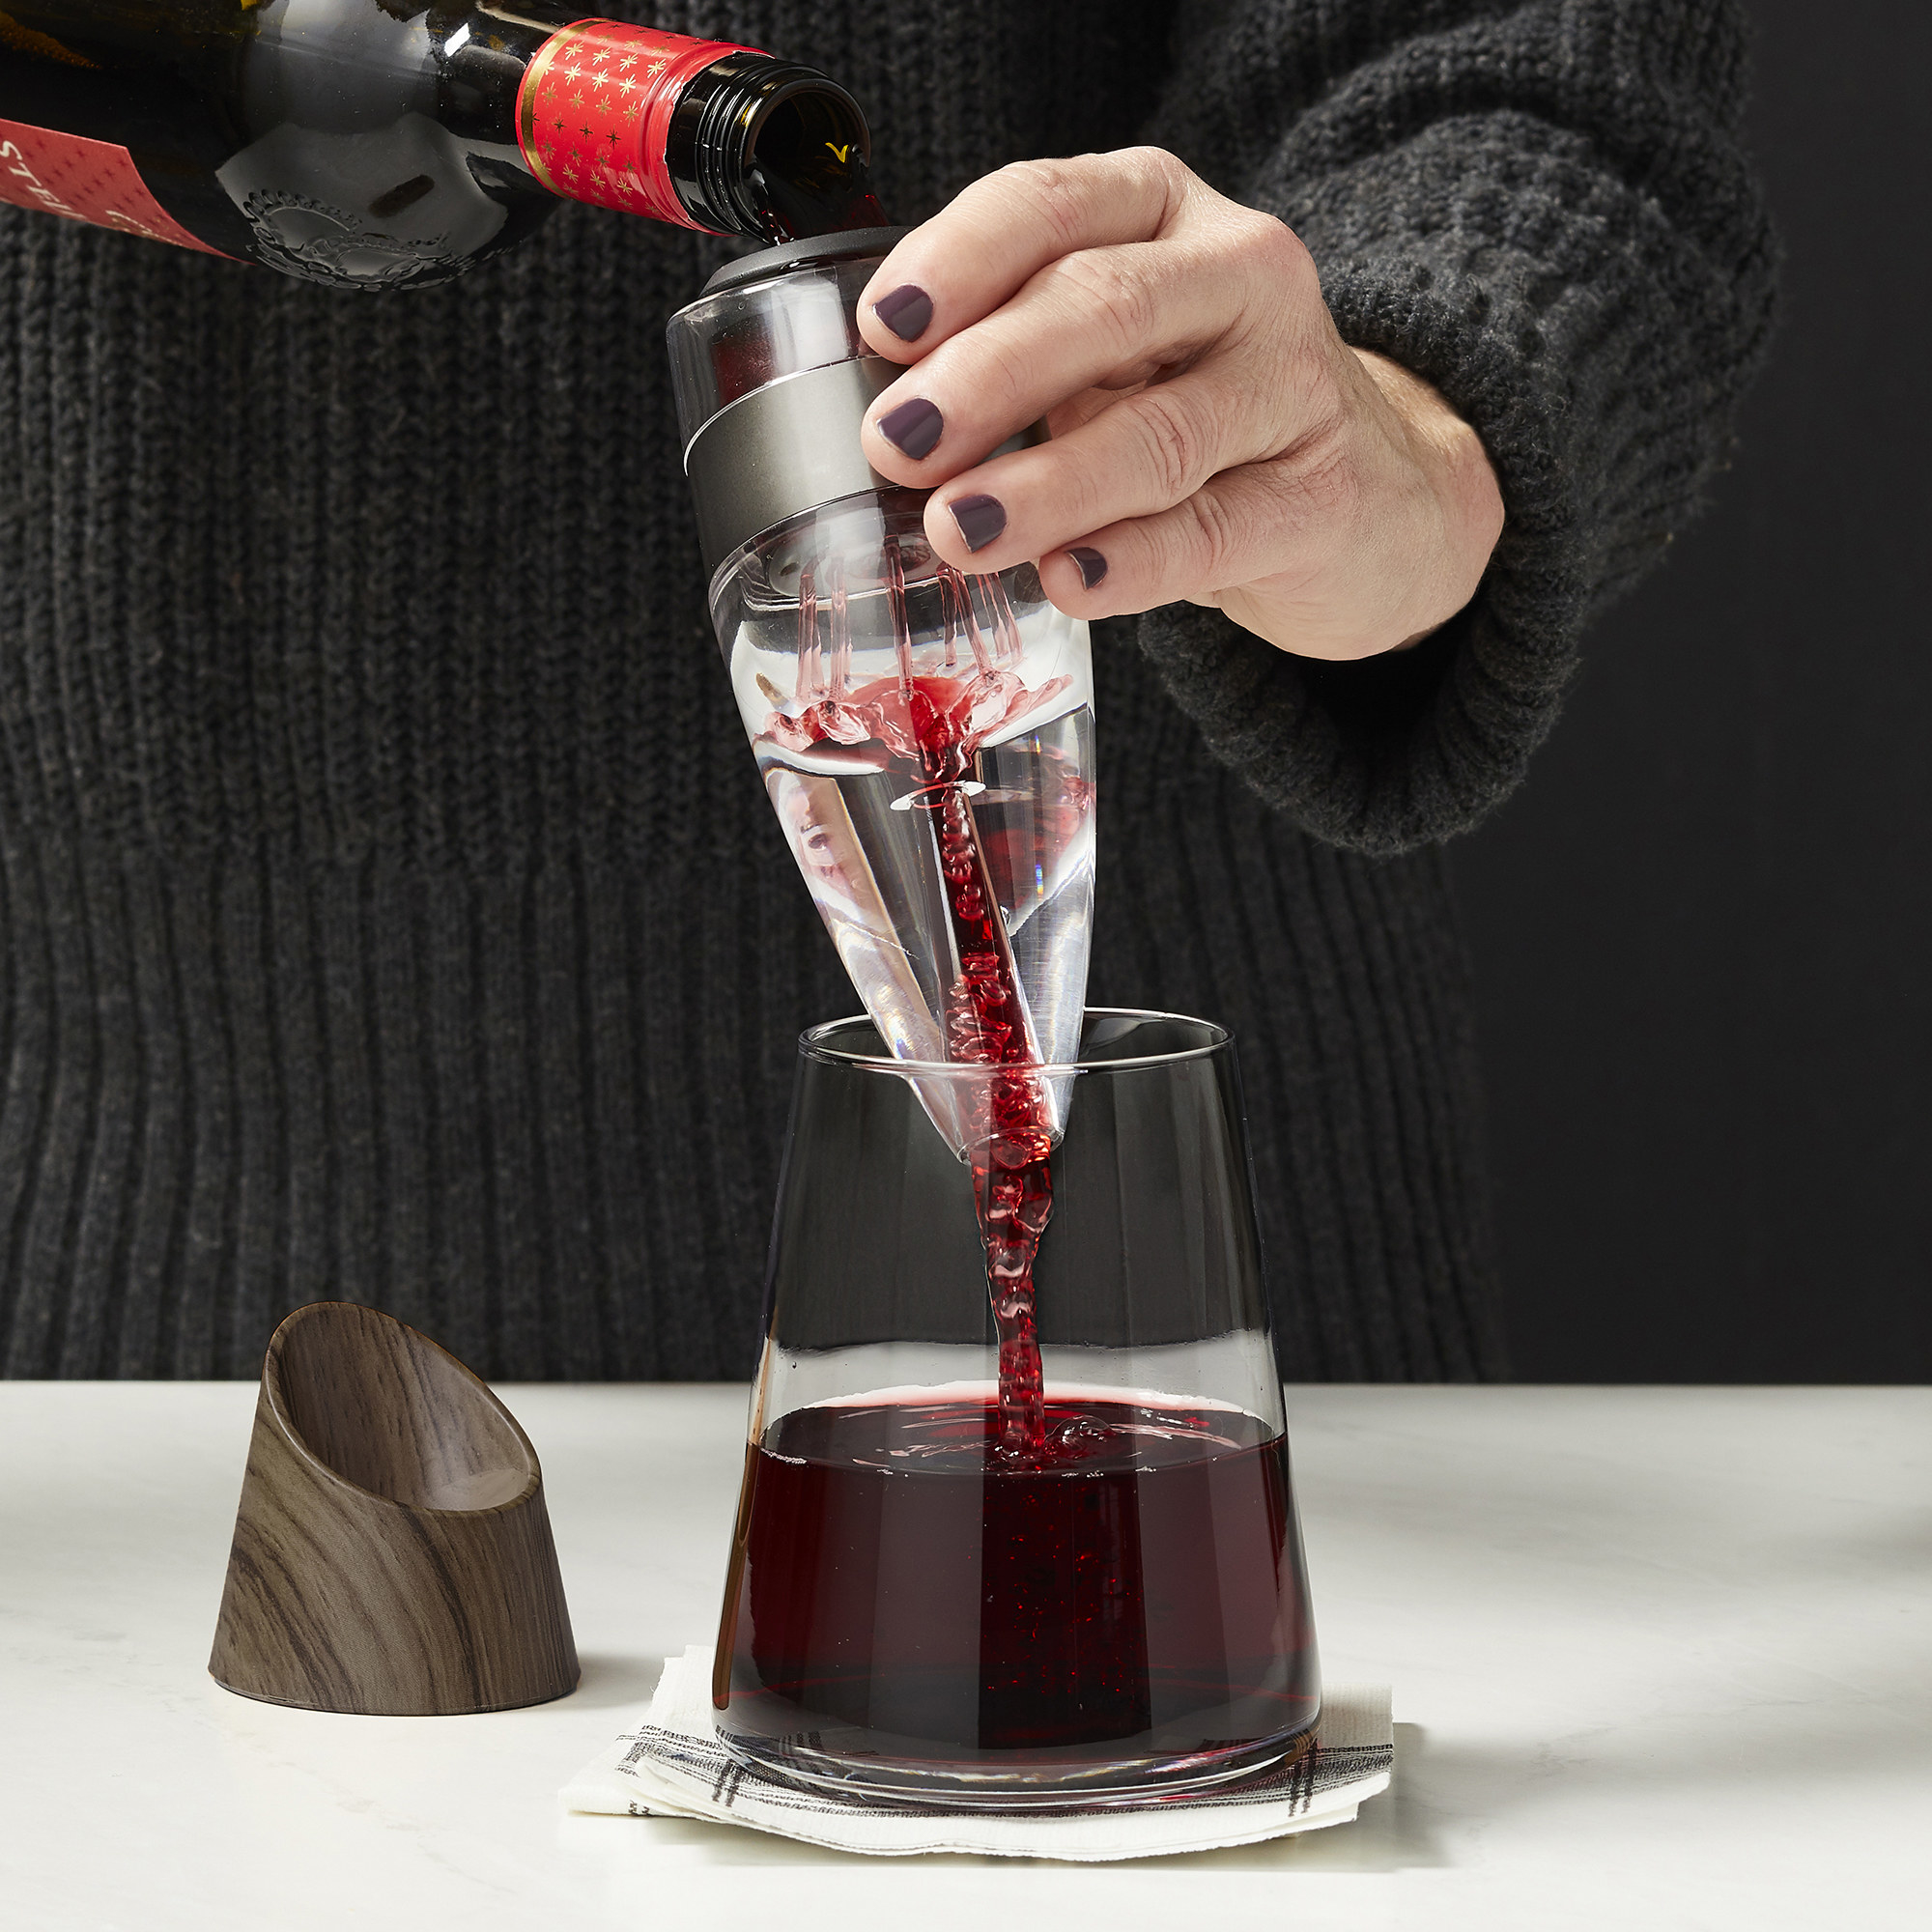 Model pouring wine through aerator into decanter